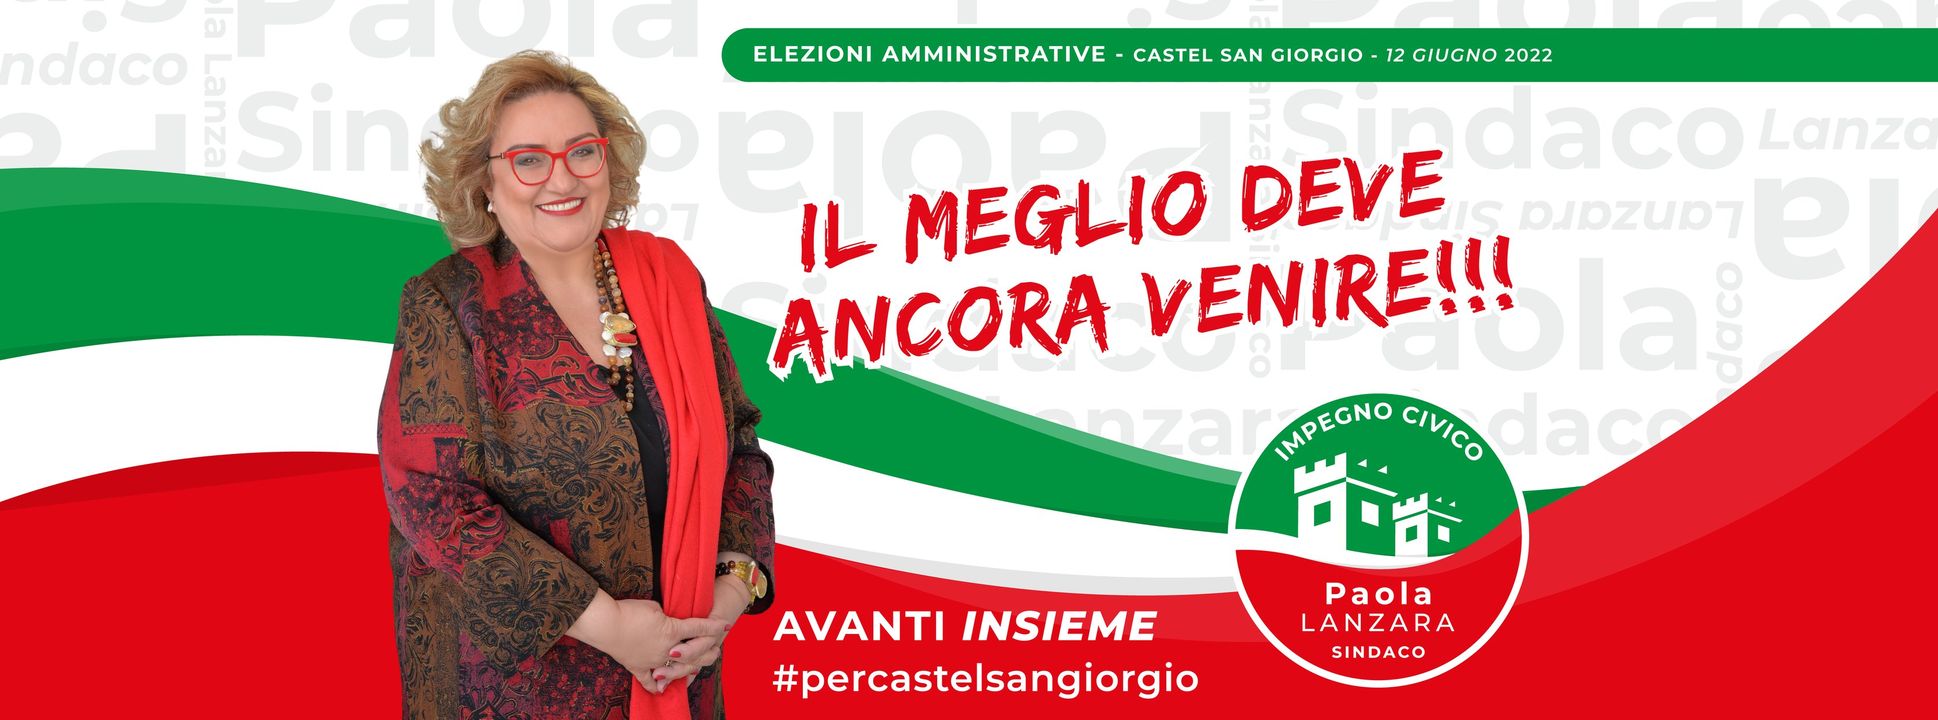 Castel San Giorgio: Amministrative, Avanti Insieme con Paola Lanzara Sindaco